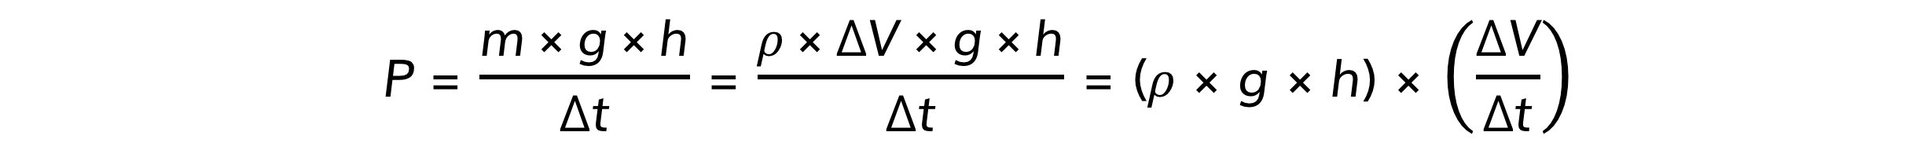 8.1.5-Equation-3